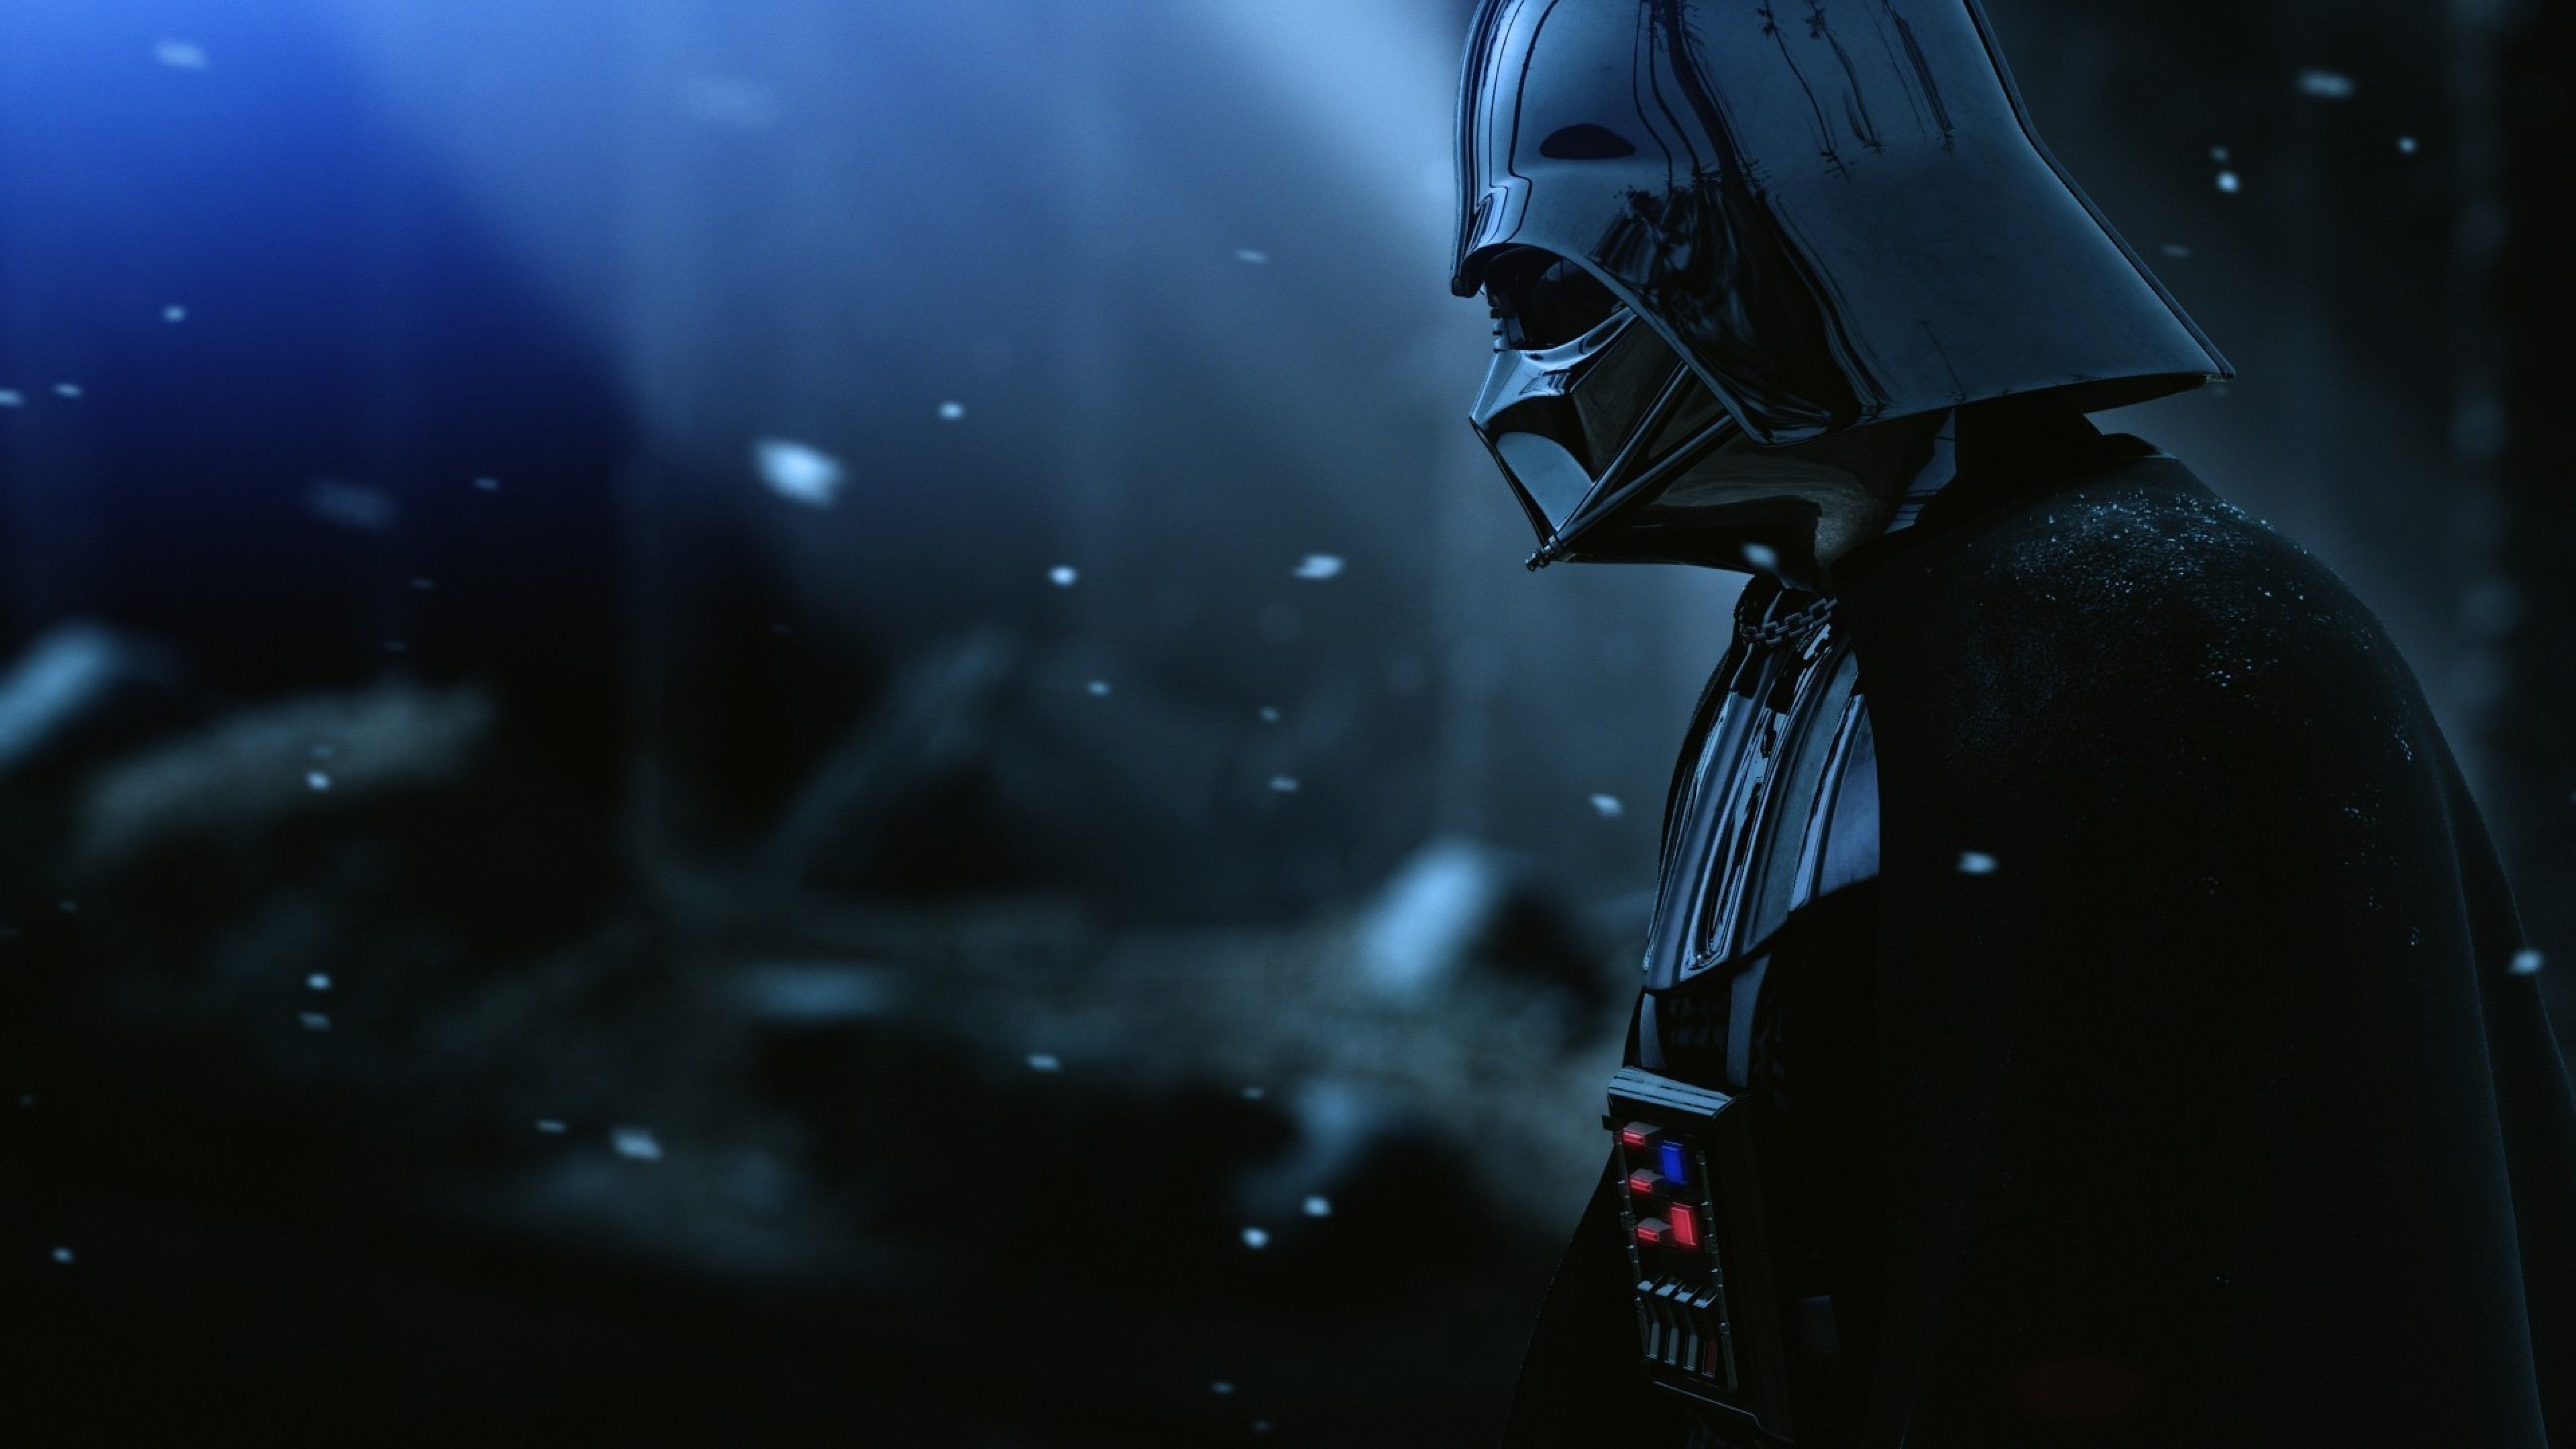 4K Star Wars wallpaper ·① Download free stunning full HD wallpapers for